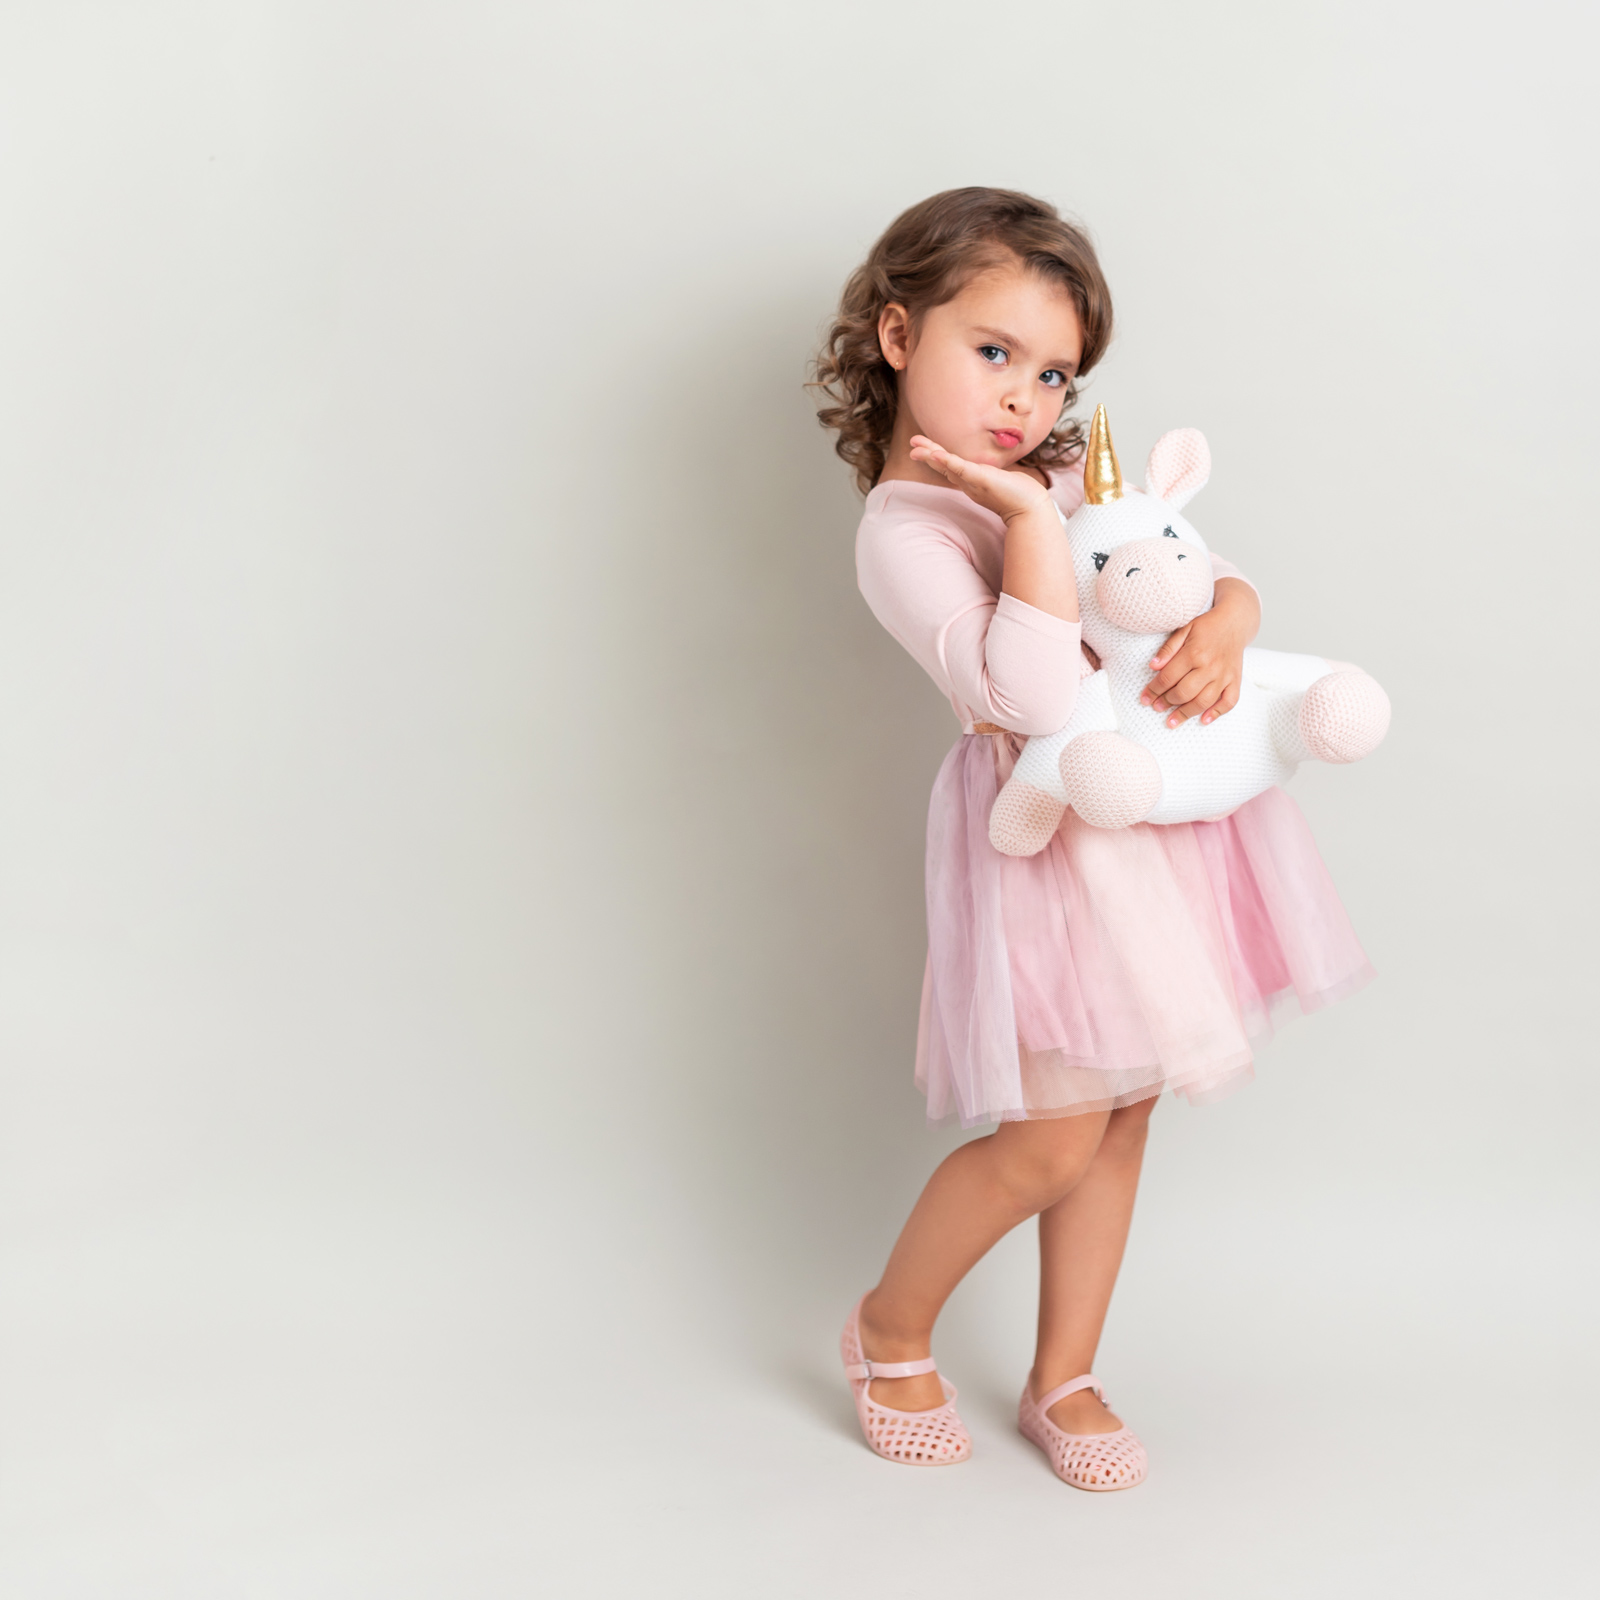 Child Mila Jones actress cute photos in pink dress